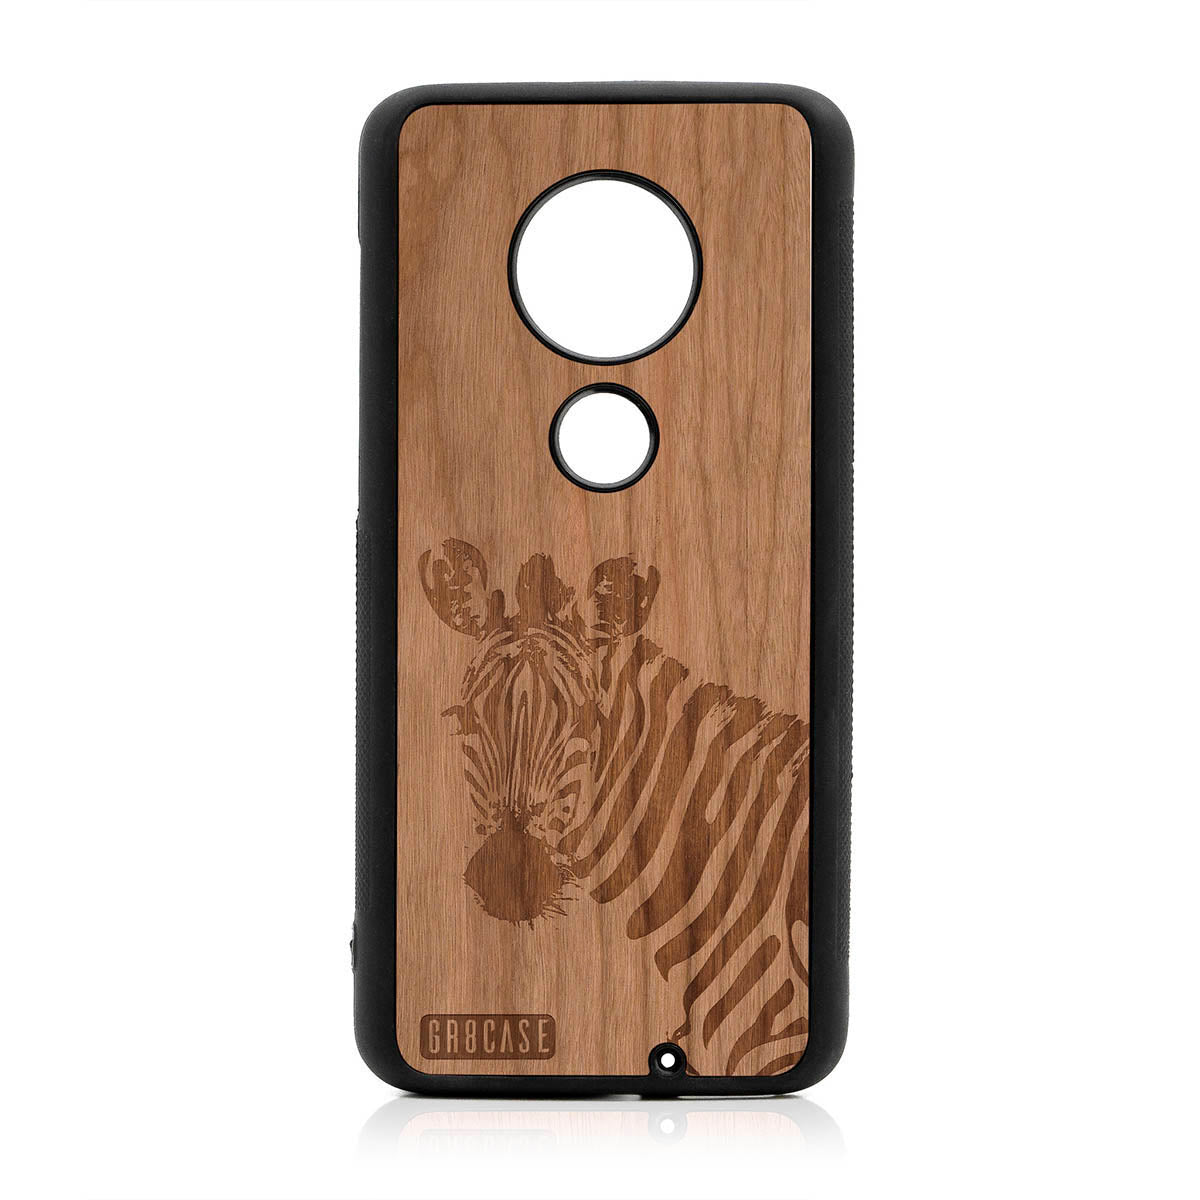 Lookout Zebra Design Wood Case For Moto G7 Plus